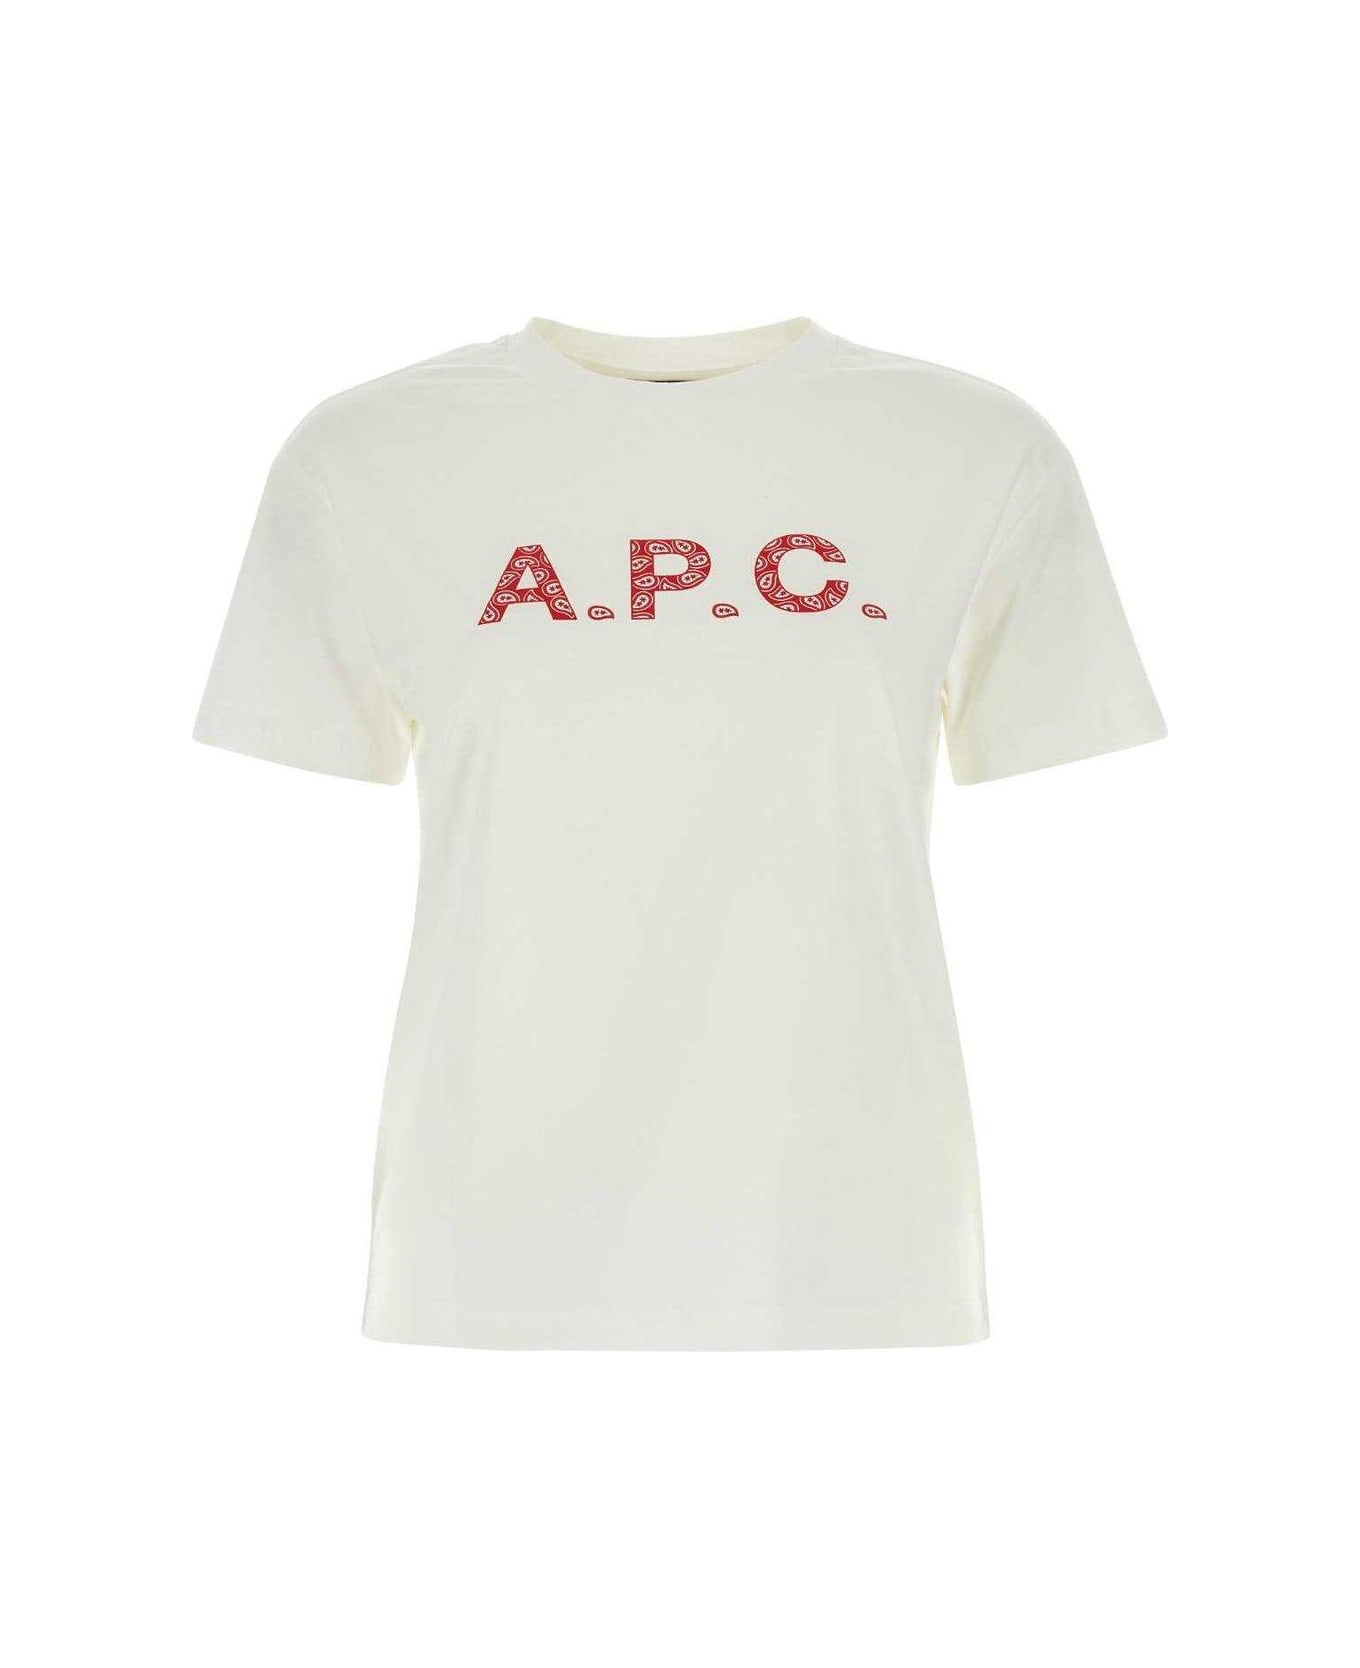 A.P.C. Signature T-shirt - Multicolor